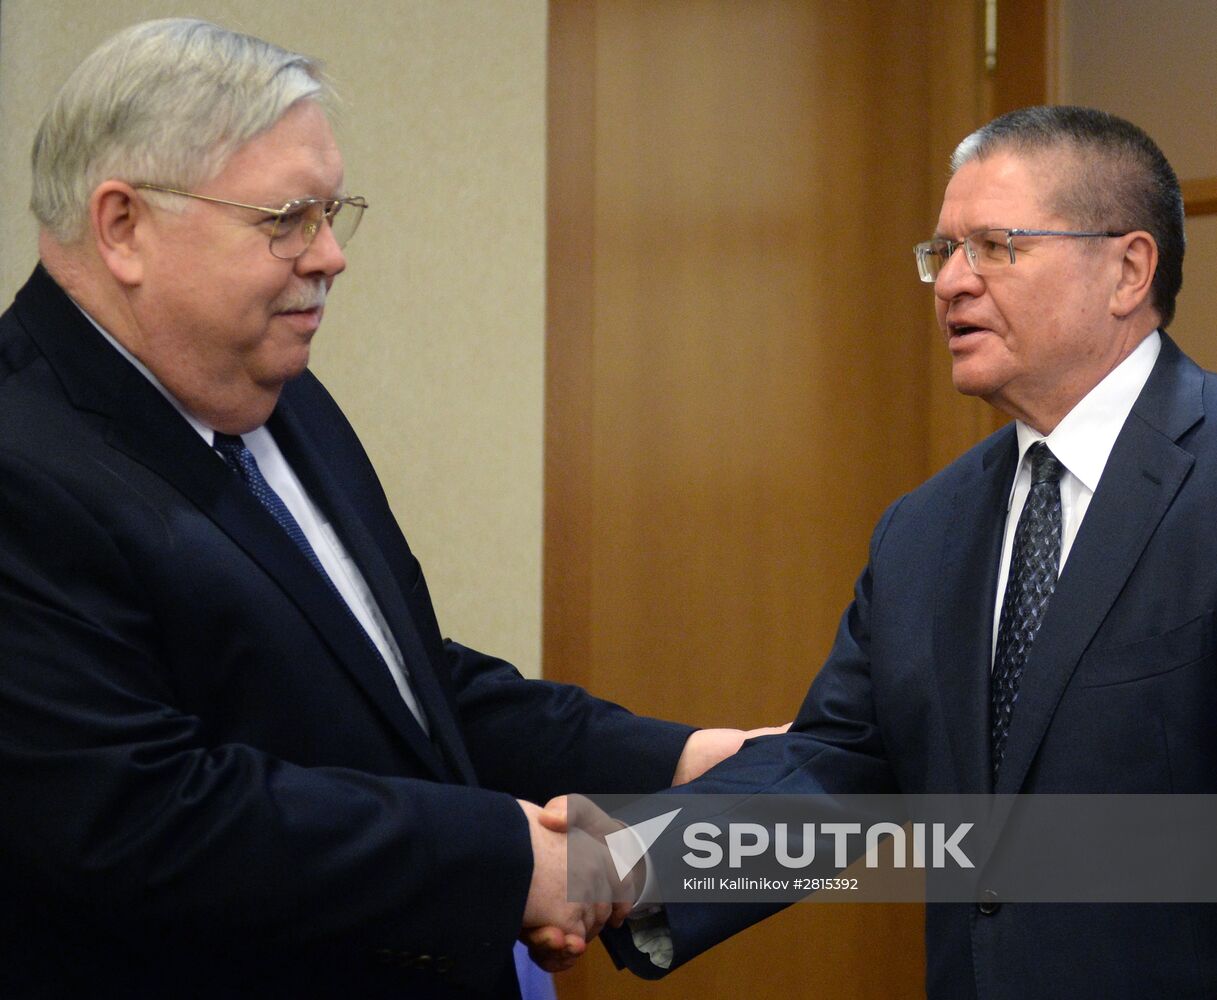 Russian Economic Development Minister Aleksei Ulyukaev meets with US Ambassador John Tefft